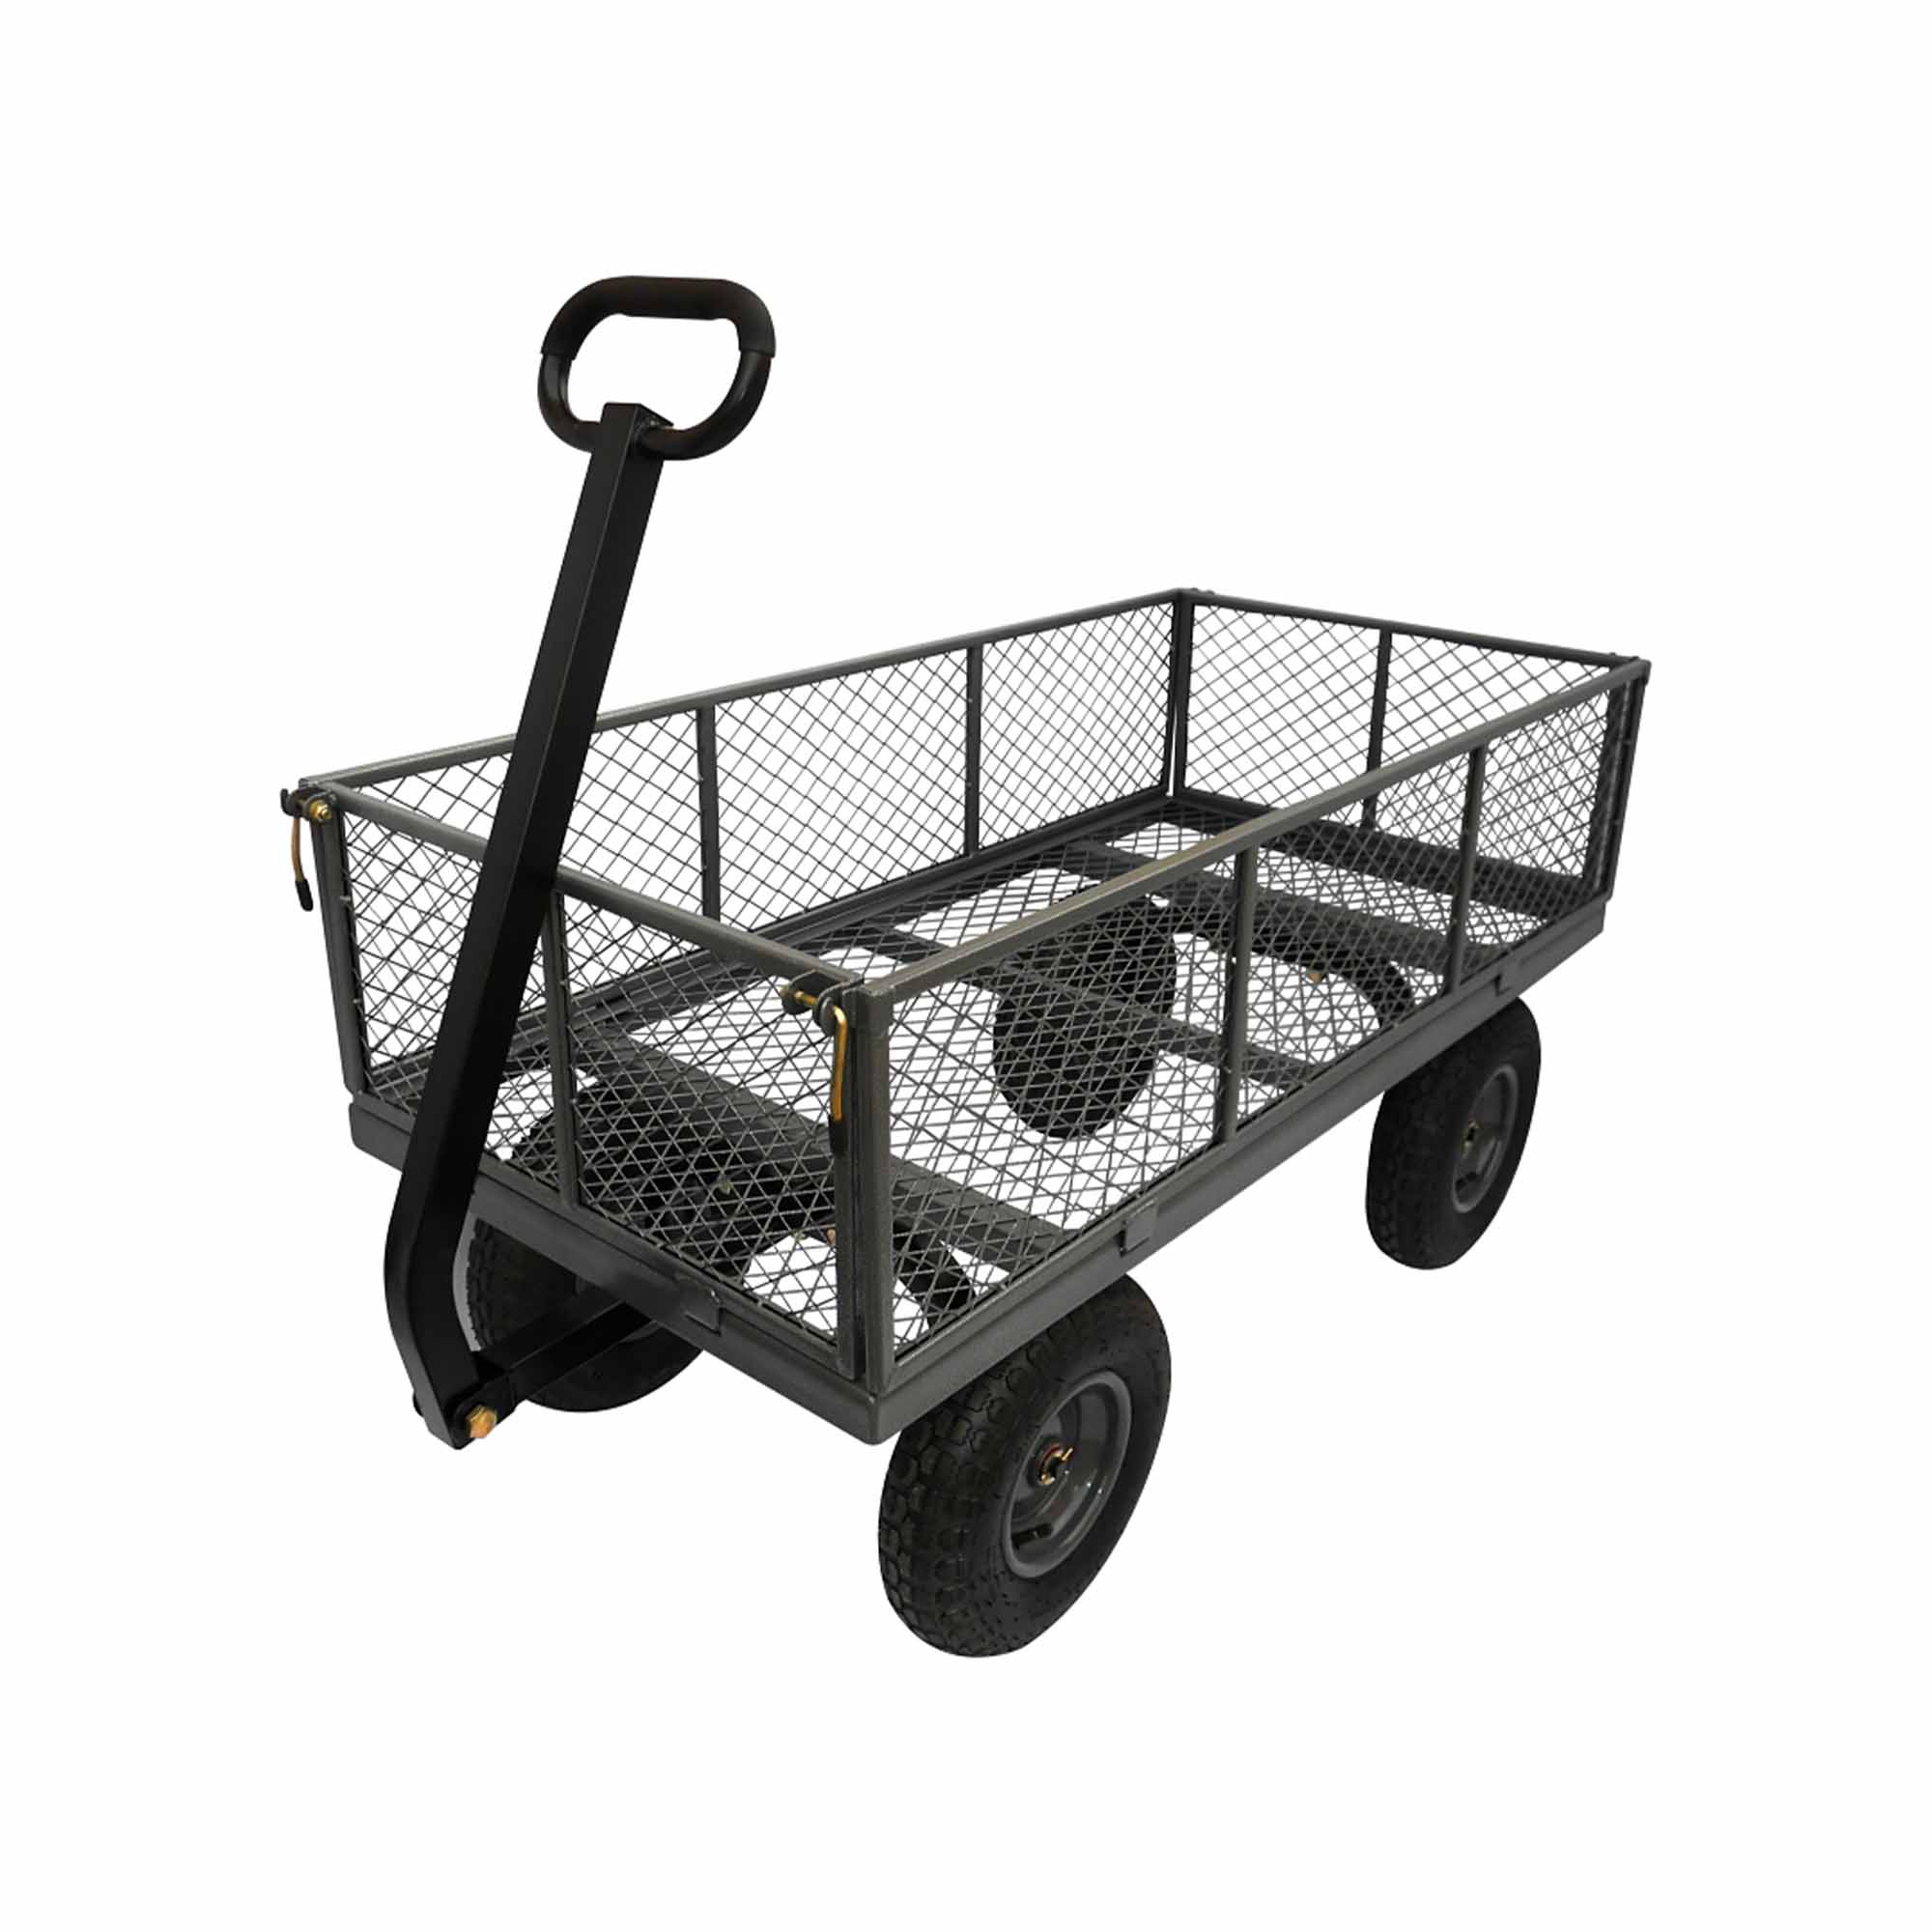 Landscaper's Select - 1200 lb Garden Cart